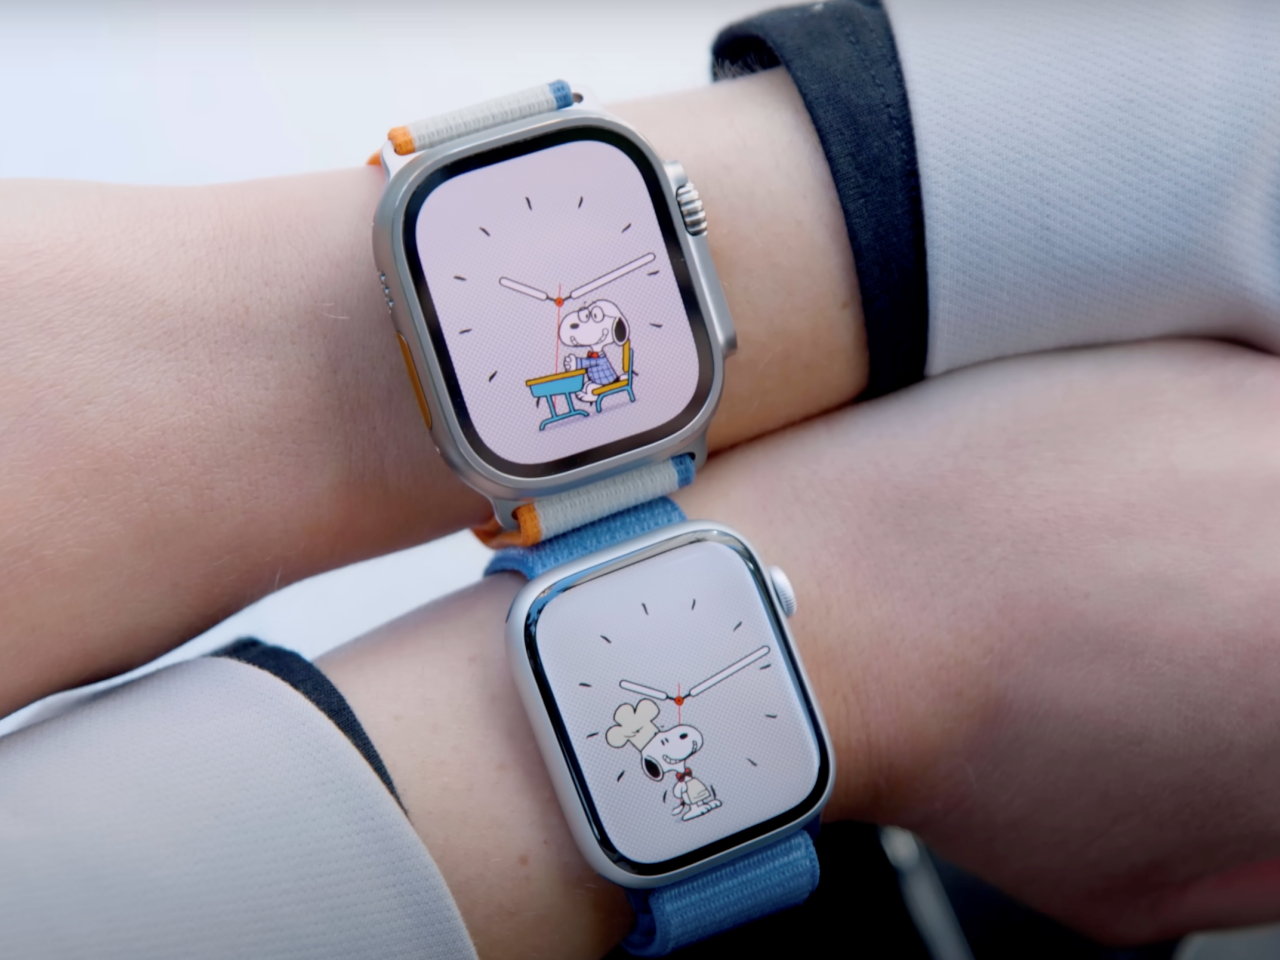 「Apple Watch」2機種の米国での販売禁止、一時差し止めに - CNET ...